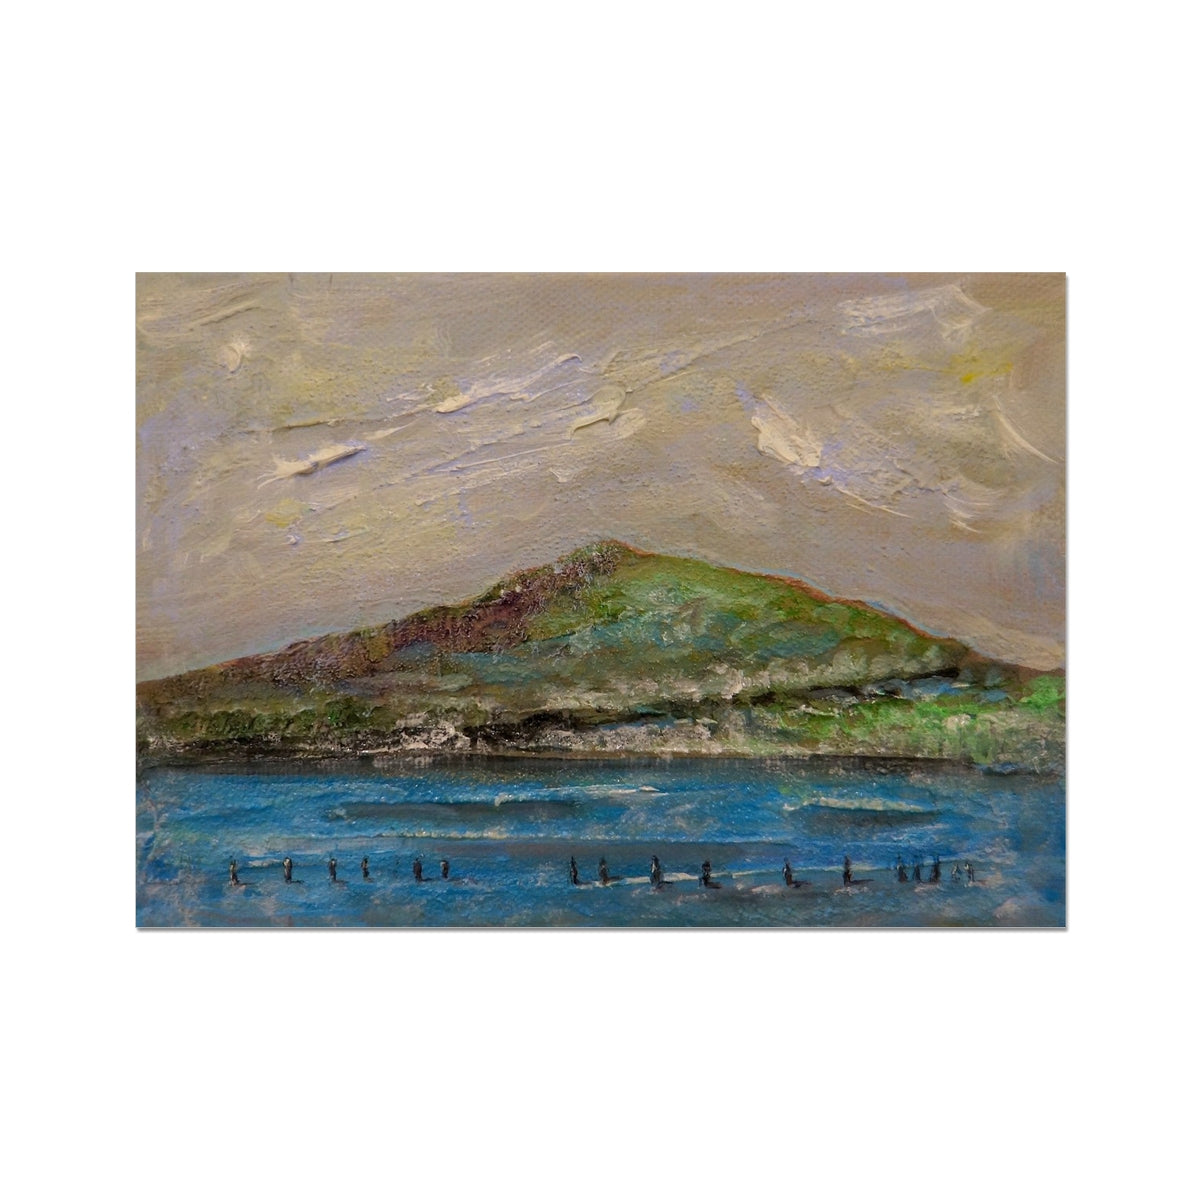 Ben Lomond iii Painting | Fine Art Prints From Scotland-Fine art-Scottish Lochs & Mountains Art Gallery-A2 Landscape-Paintings, Prints, Homeware, Art Gifts From Scotland By Scottish Artist Kevin Hunter